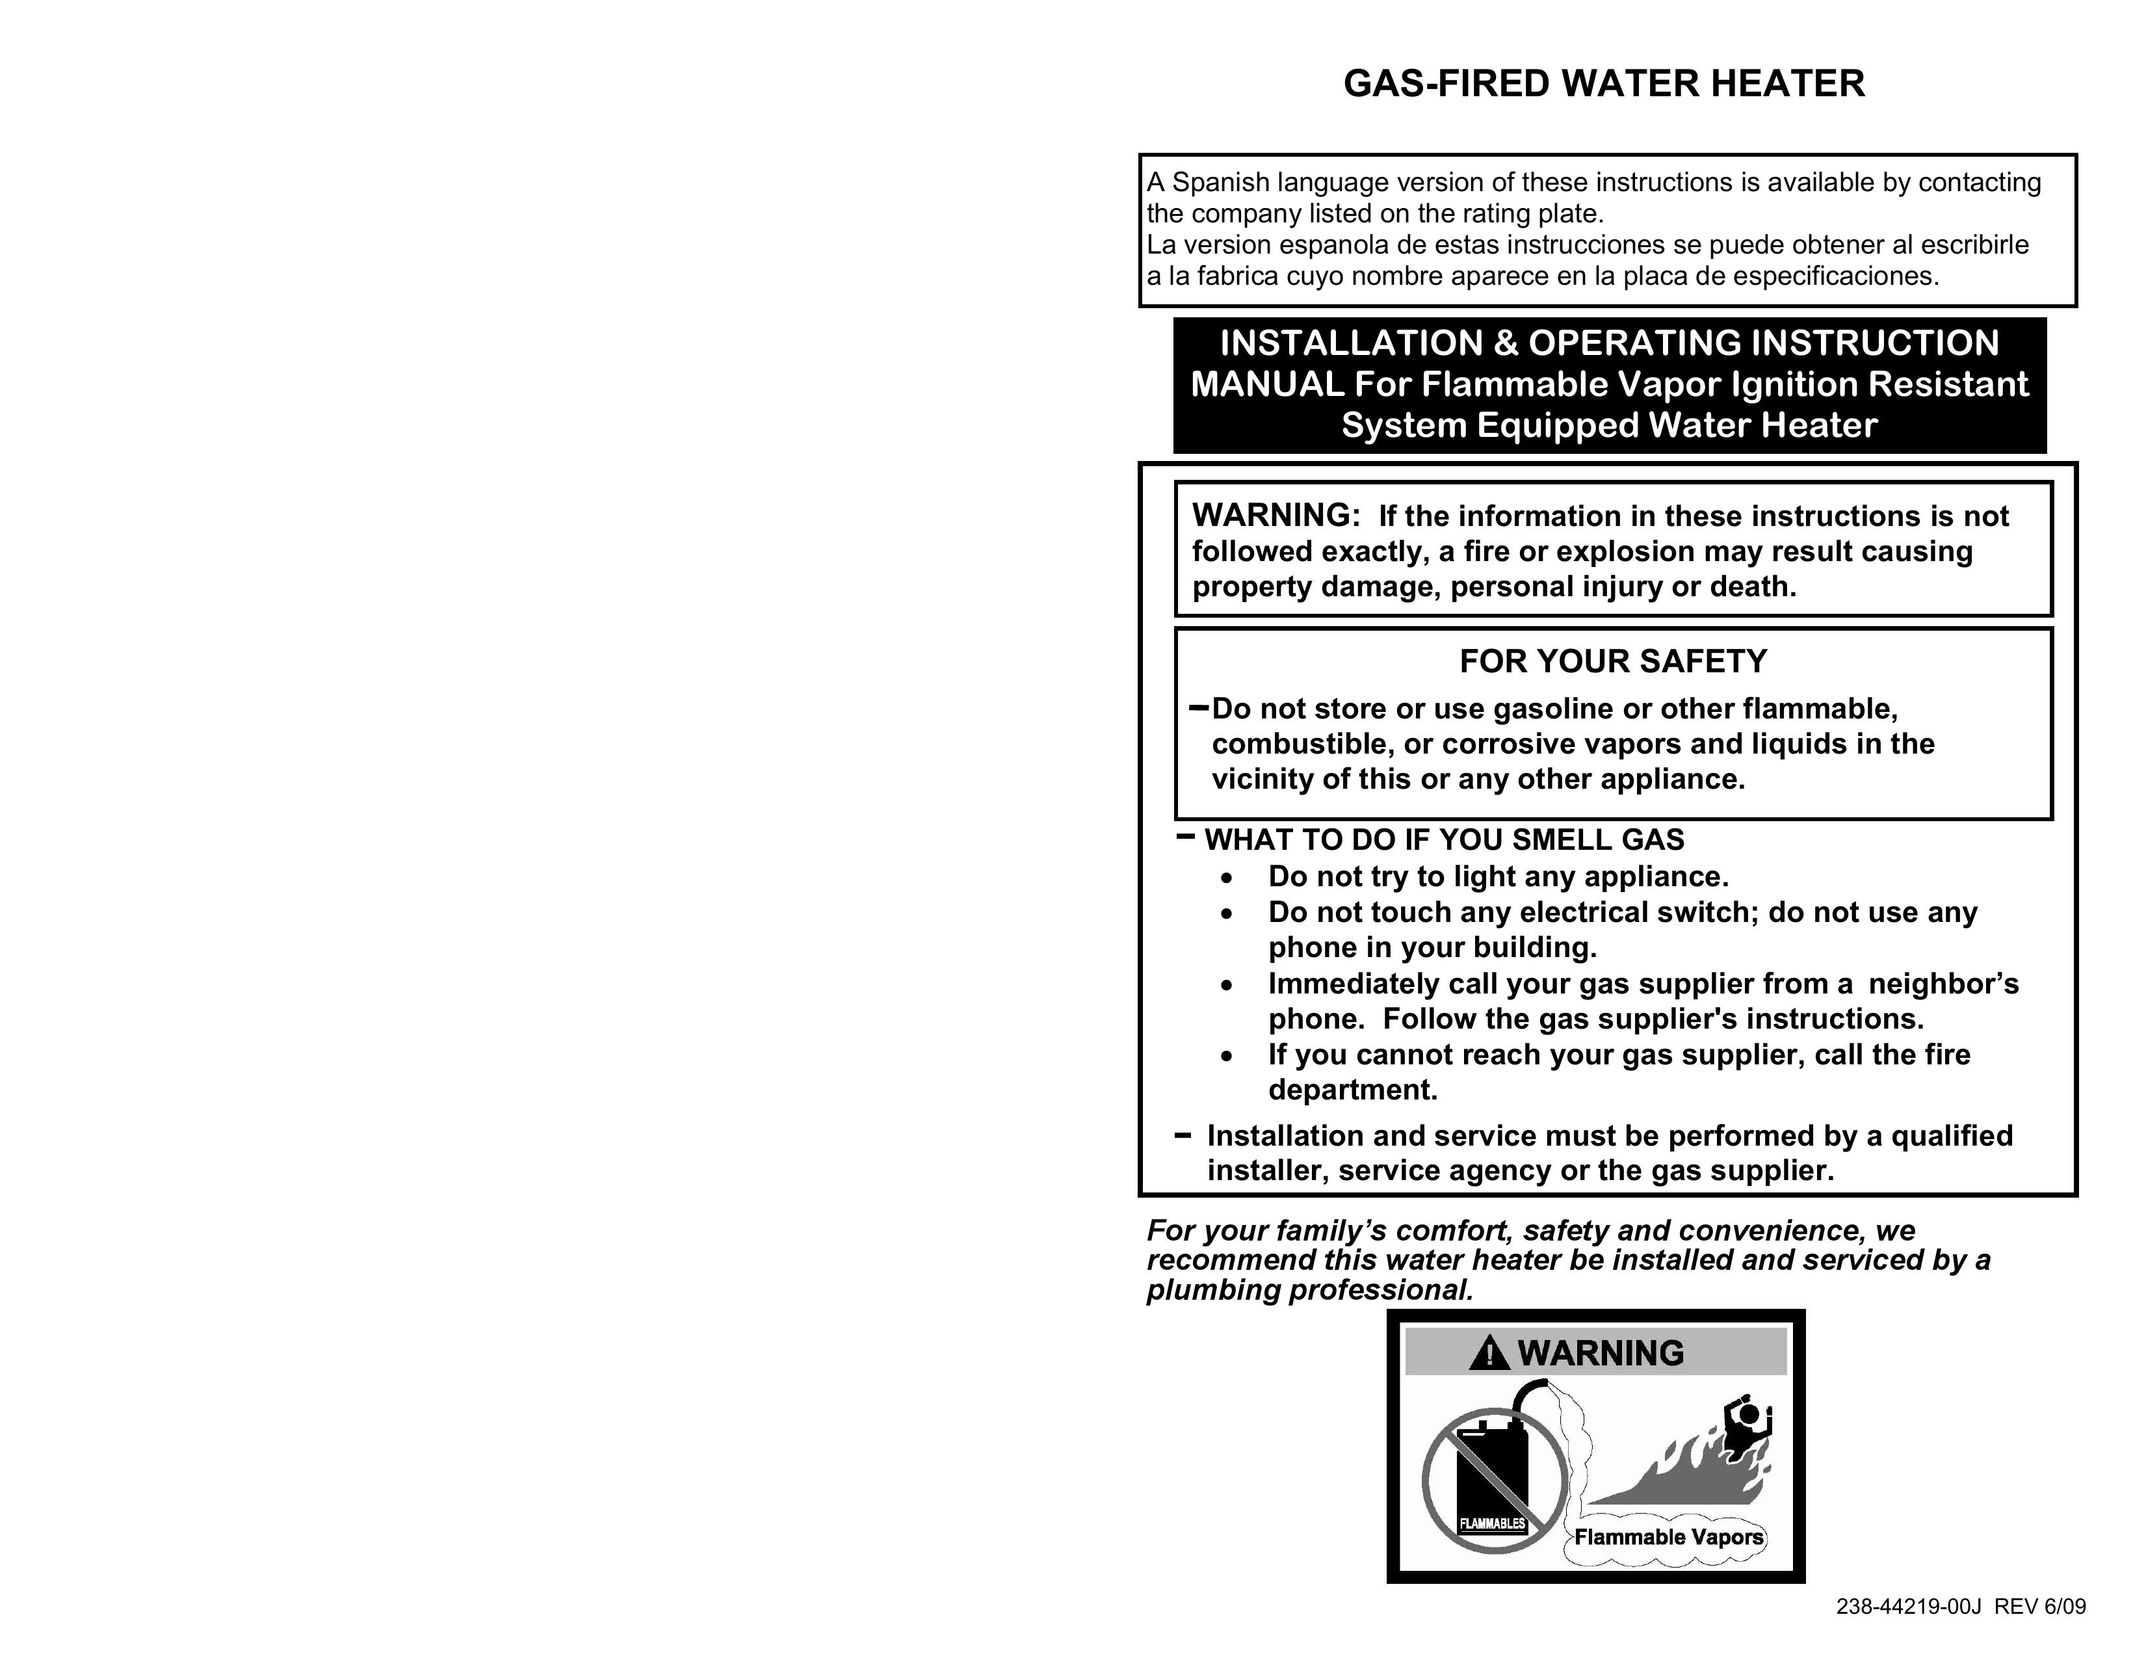 Bradford-White Corp 44219J Water Heater User Manual